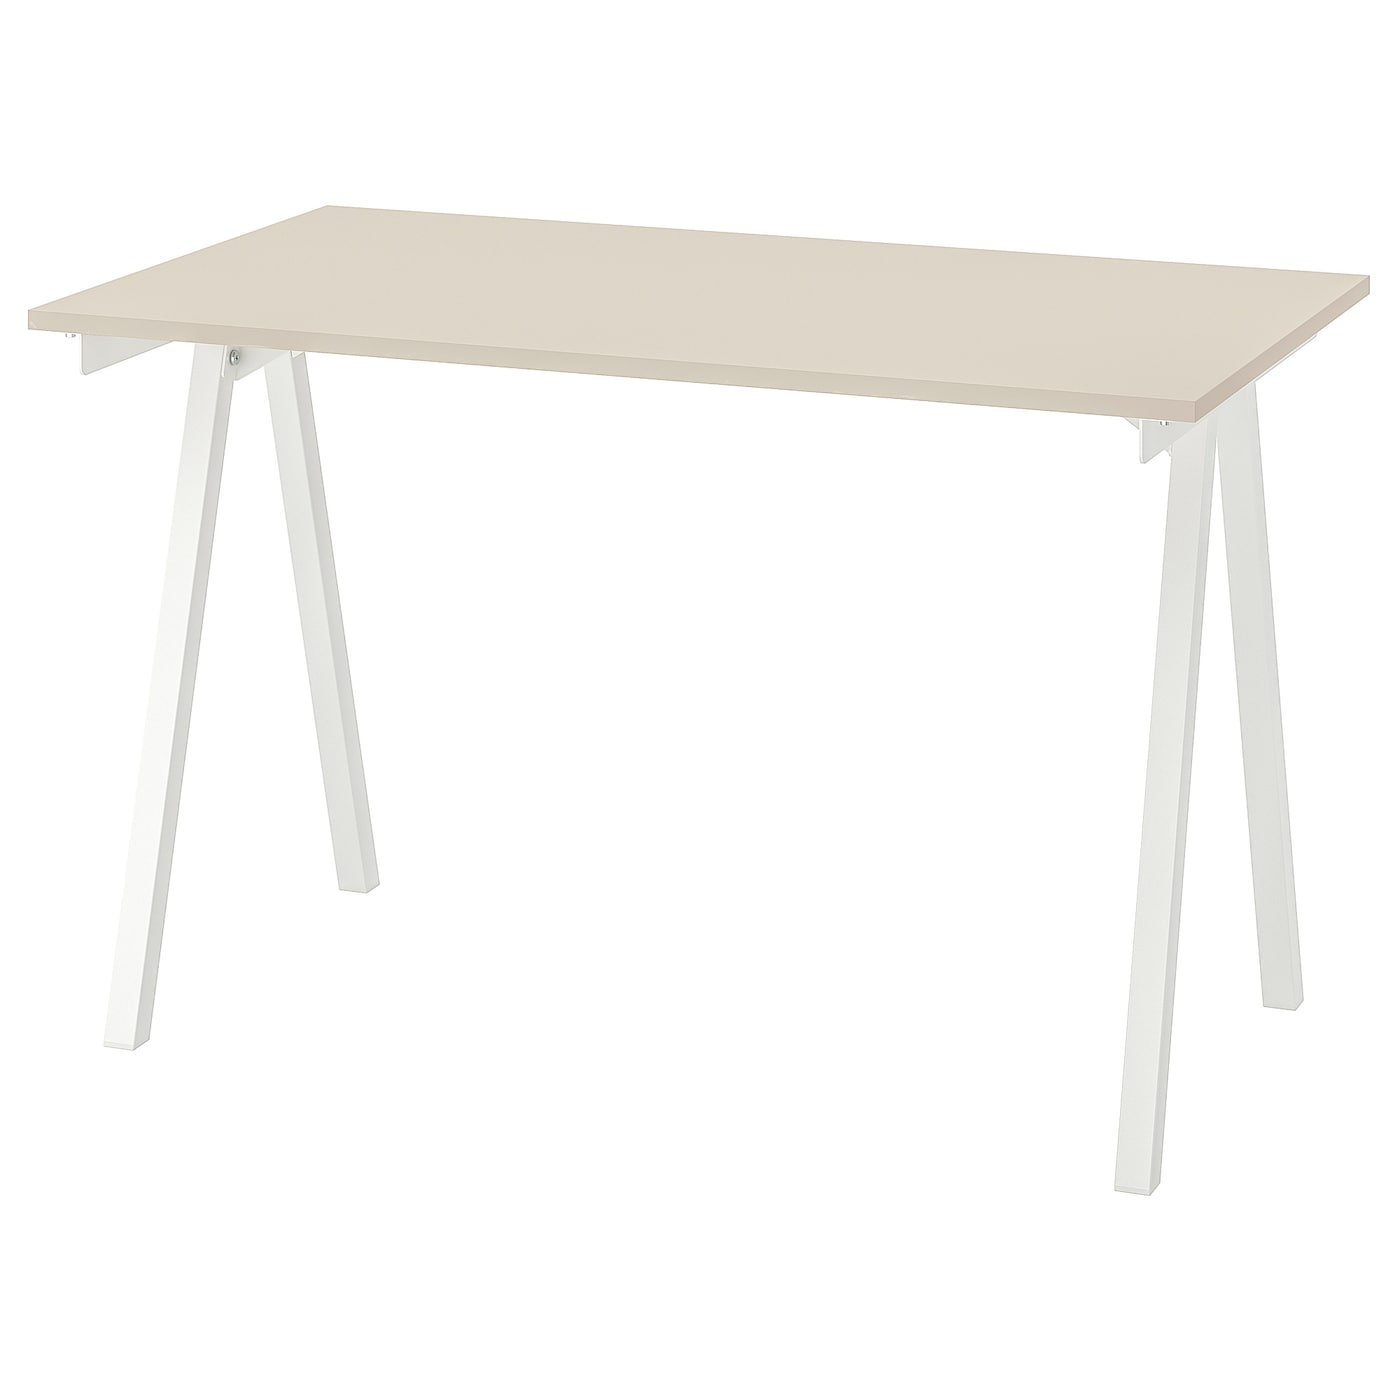 Письменный стол - IKEA TROTTEN, 120х70 см, белый/бежевый, ТРОТТЕН ИКЕА